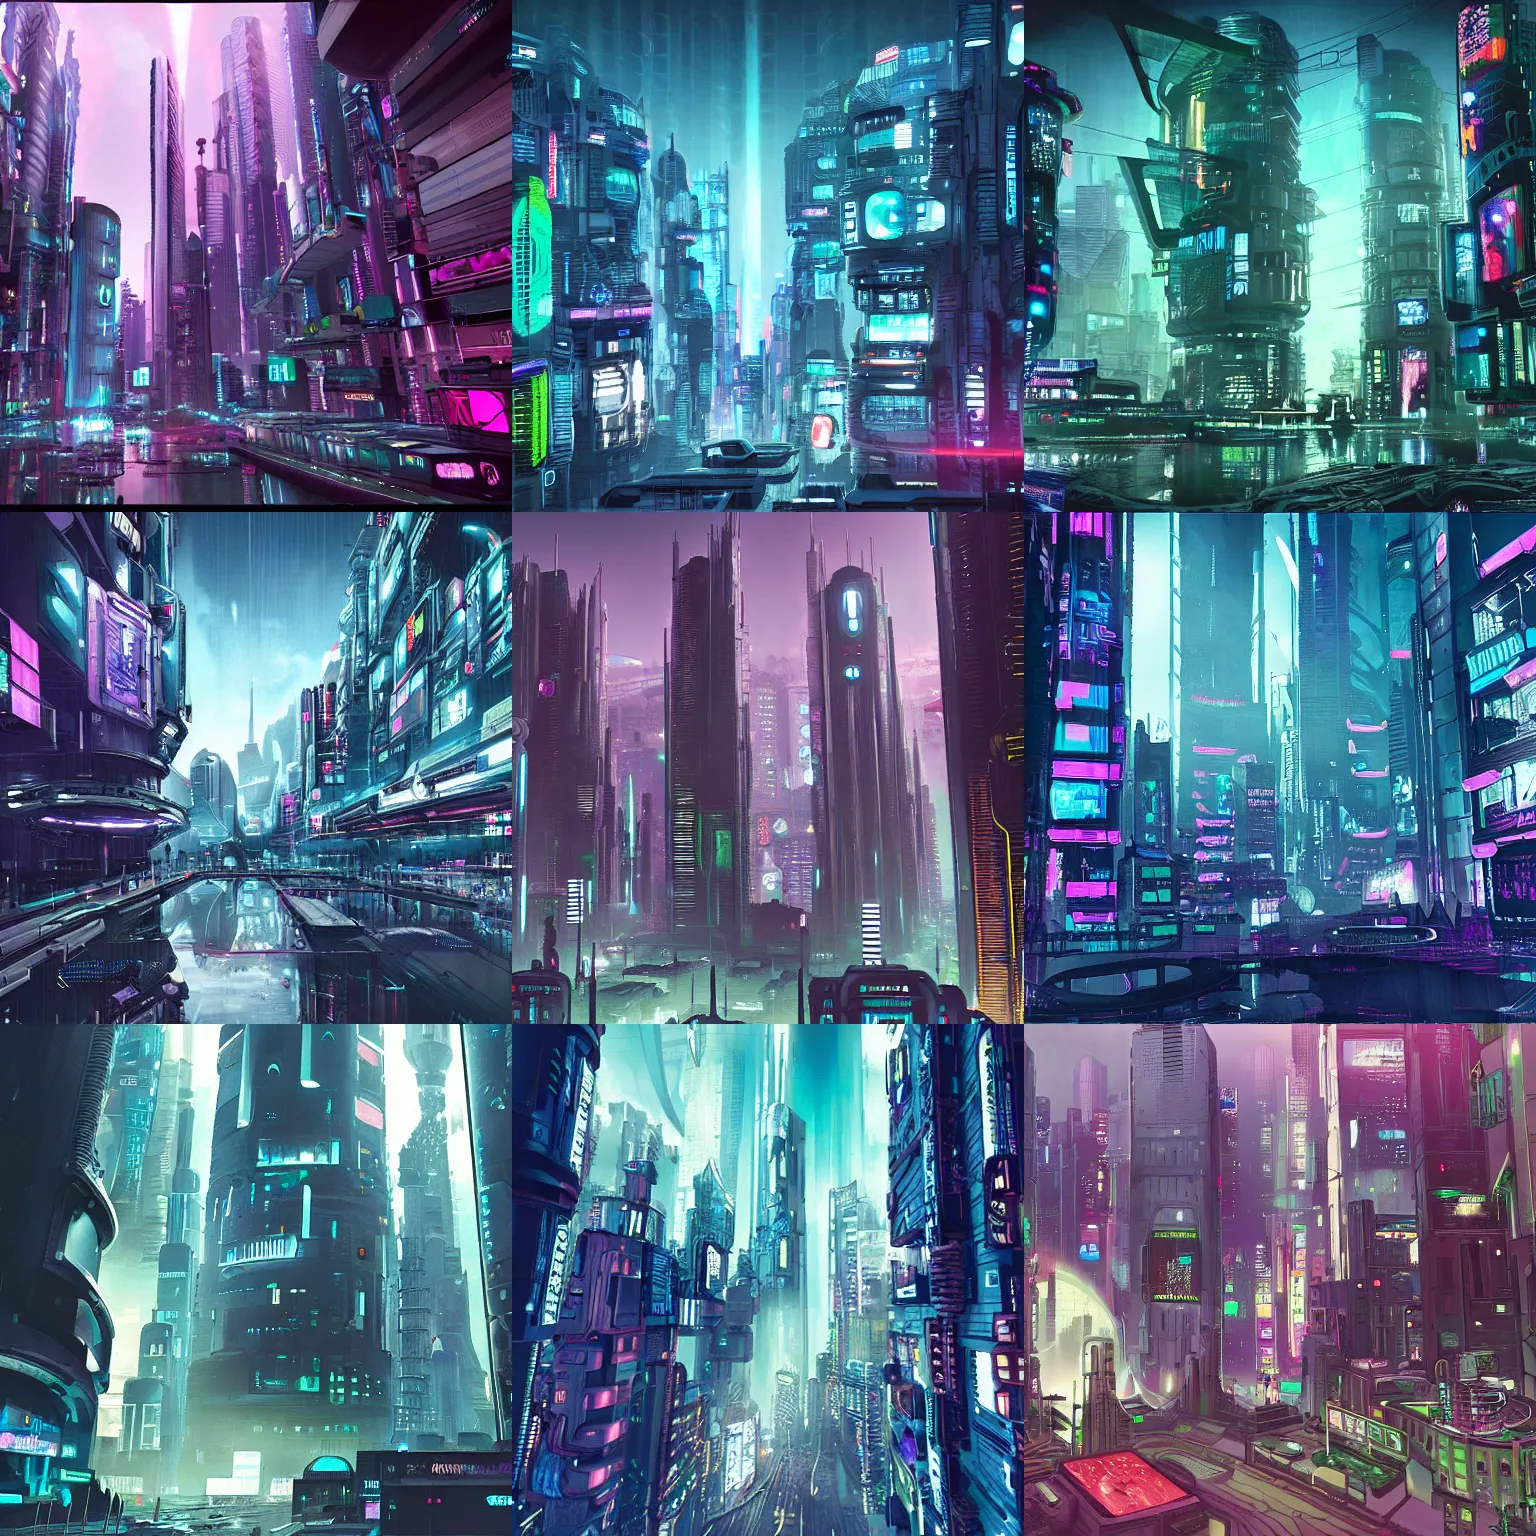 Prompt: an alien cyberpunk city